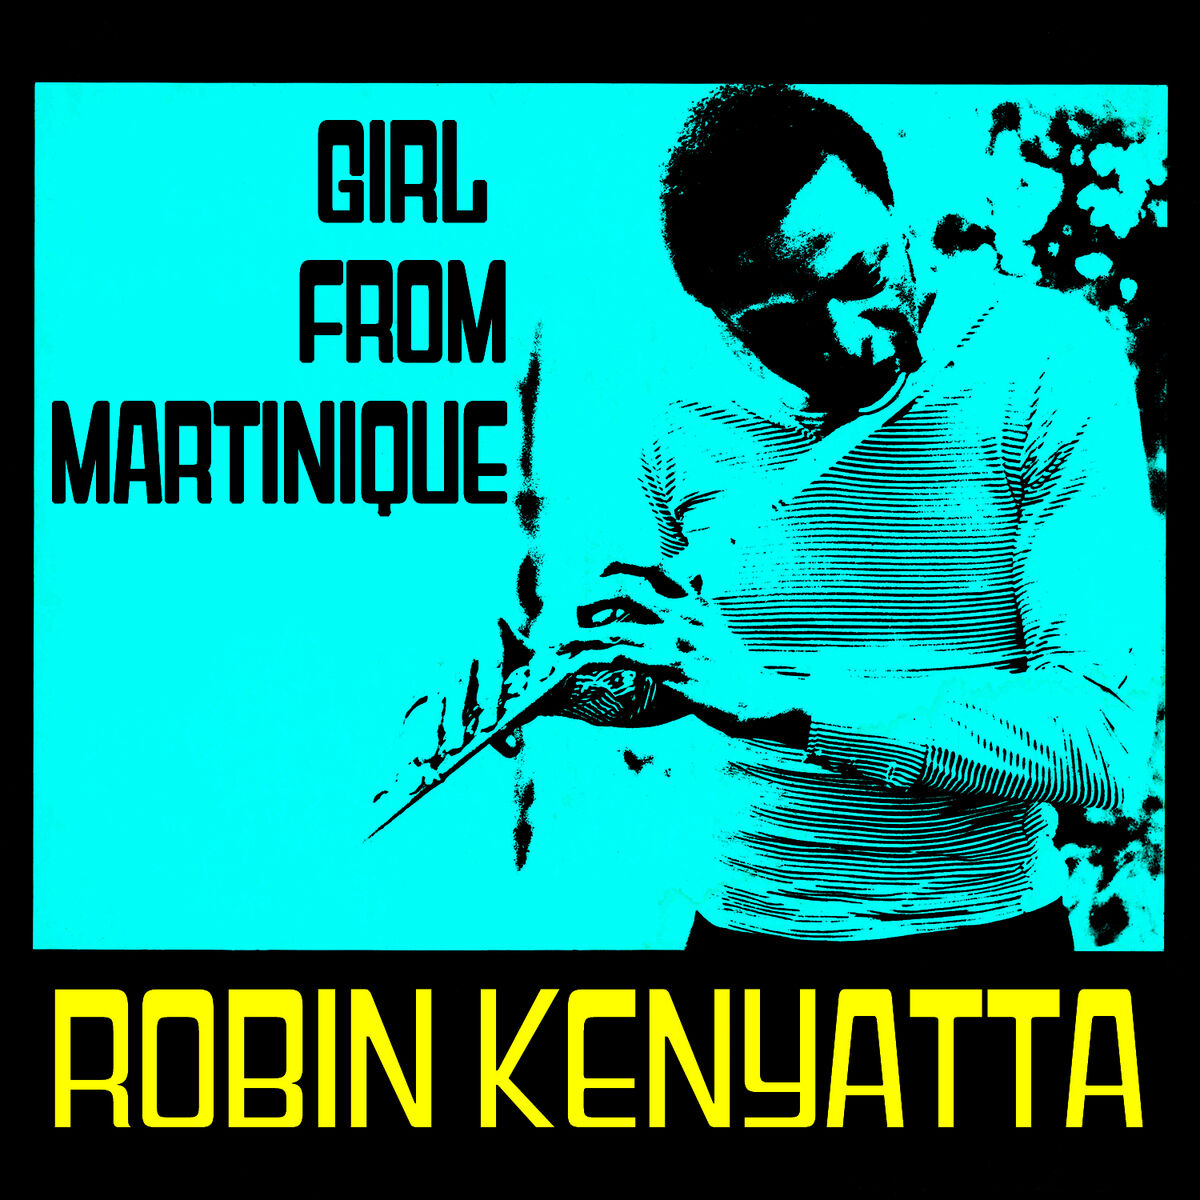 Robin Kenyatta: albums, songs, playlists | Listen on Deezer